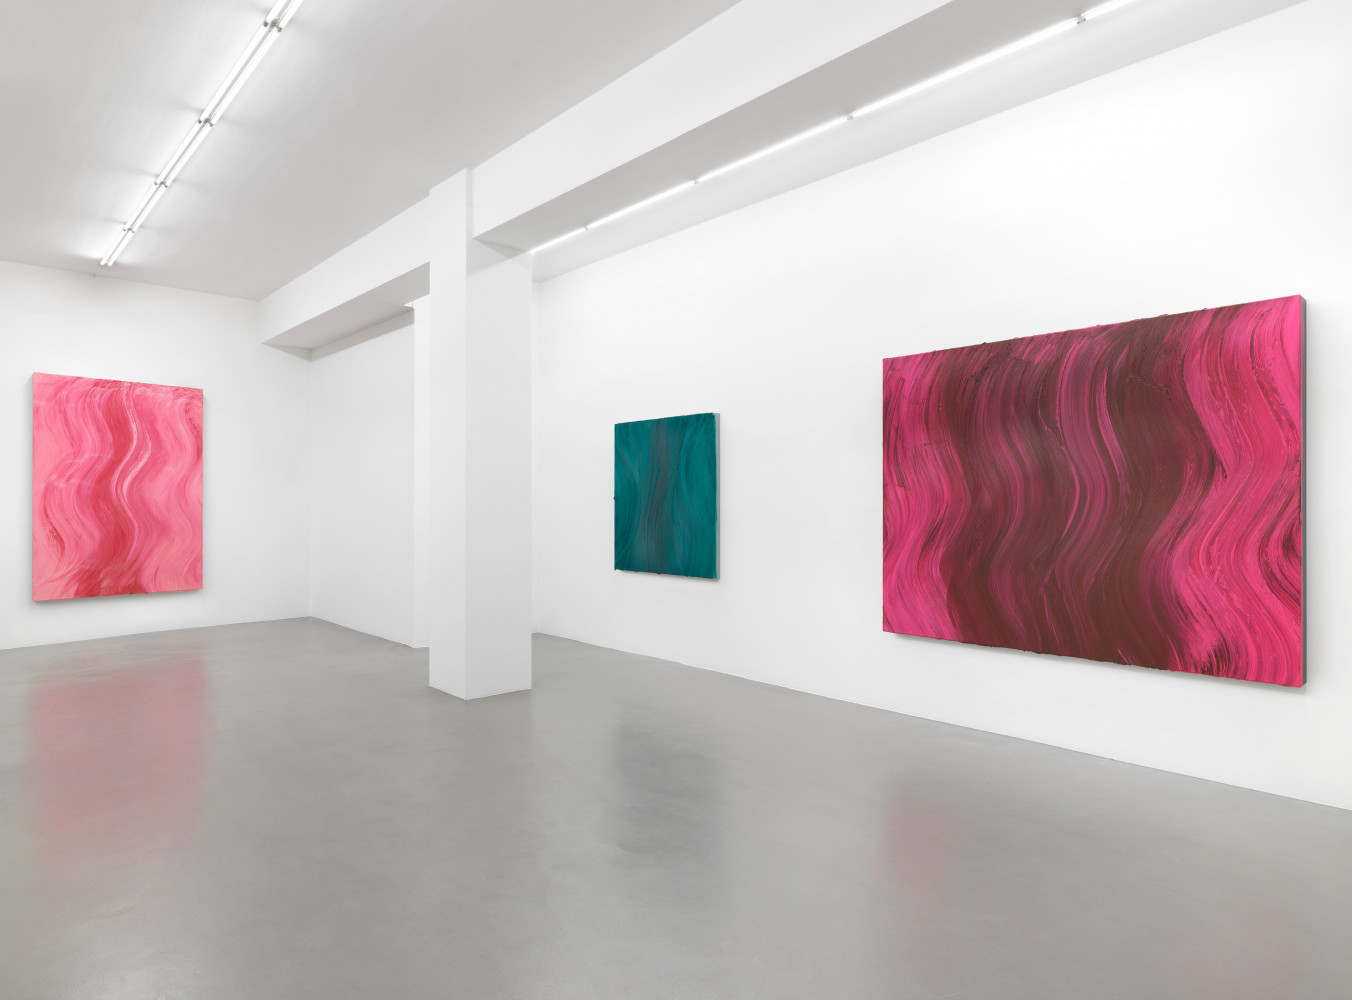 Jason Martin, ‘Polychrome Futures’, Installation view, Buchmann Galerie, 2020